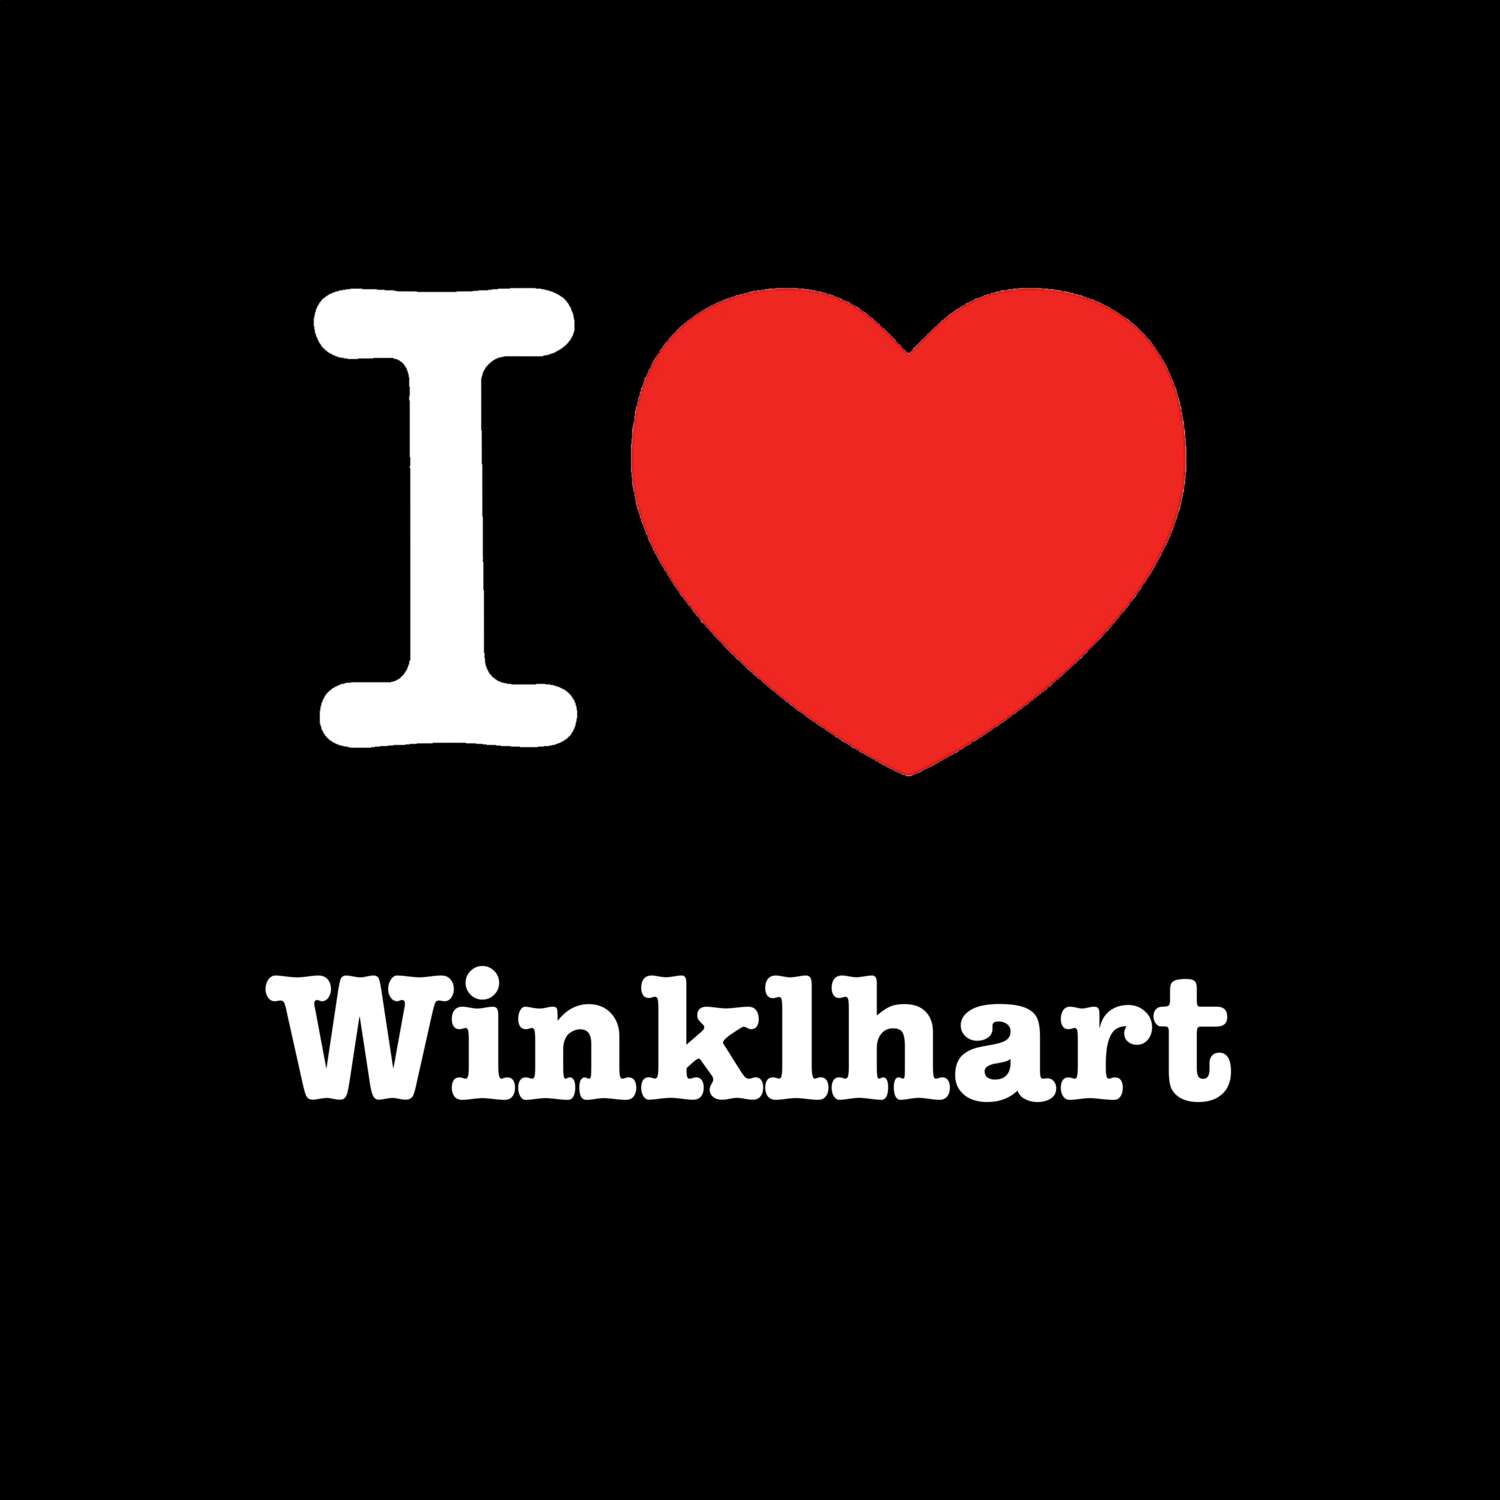 Winklhart T-Shirt »I love«